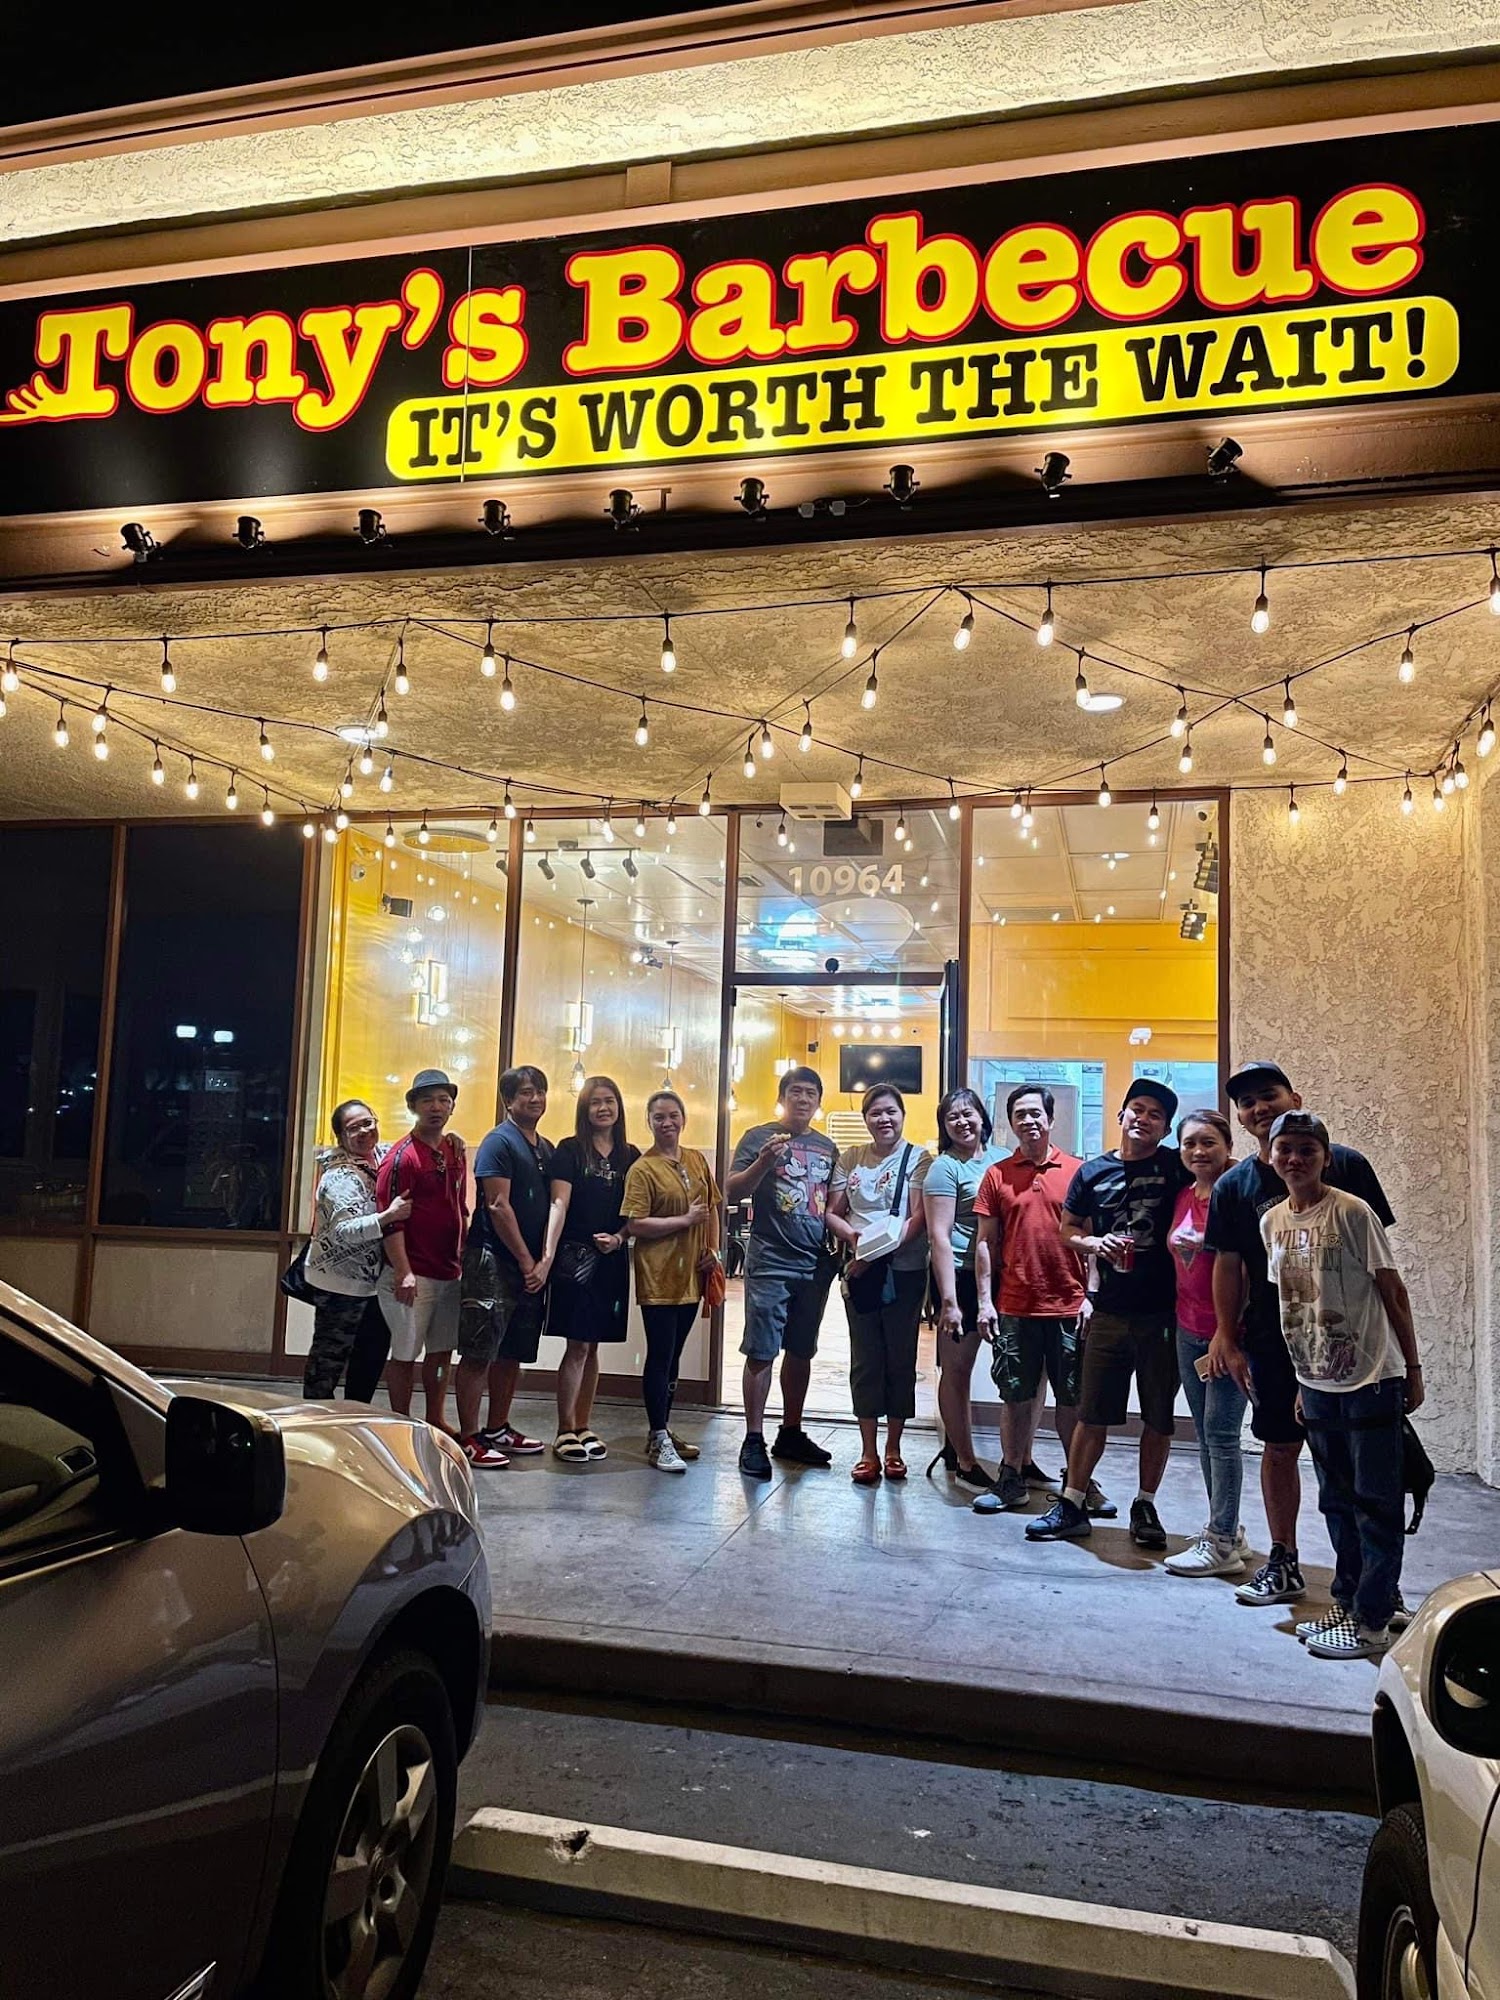 Tony's Barbecue Of Fountain Valley CA